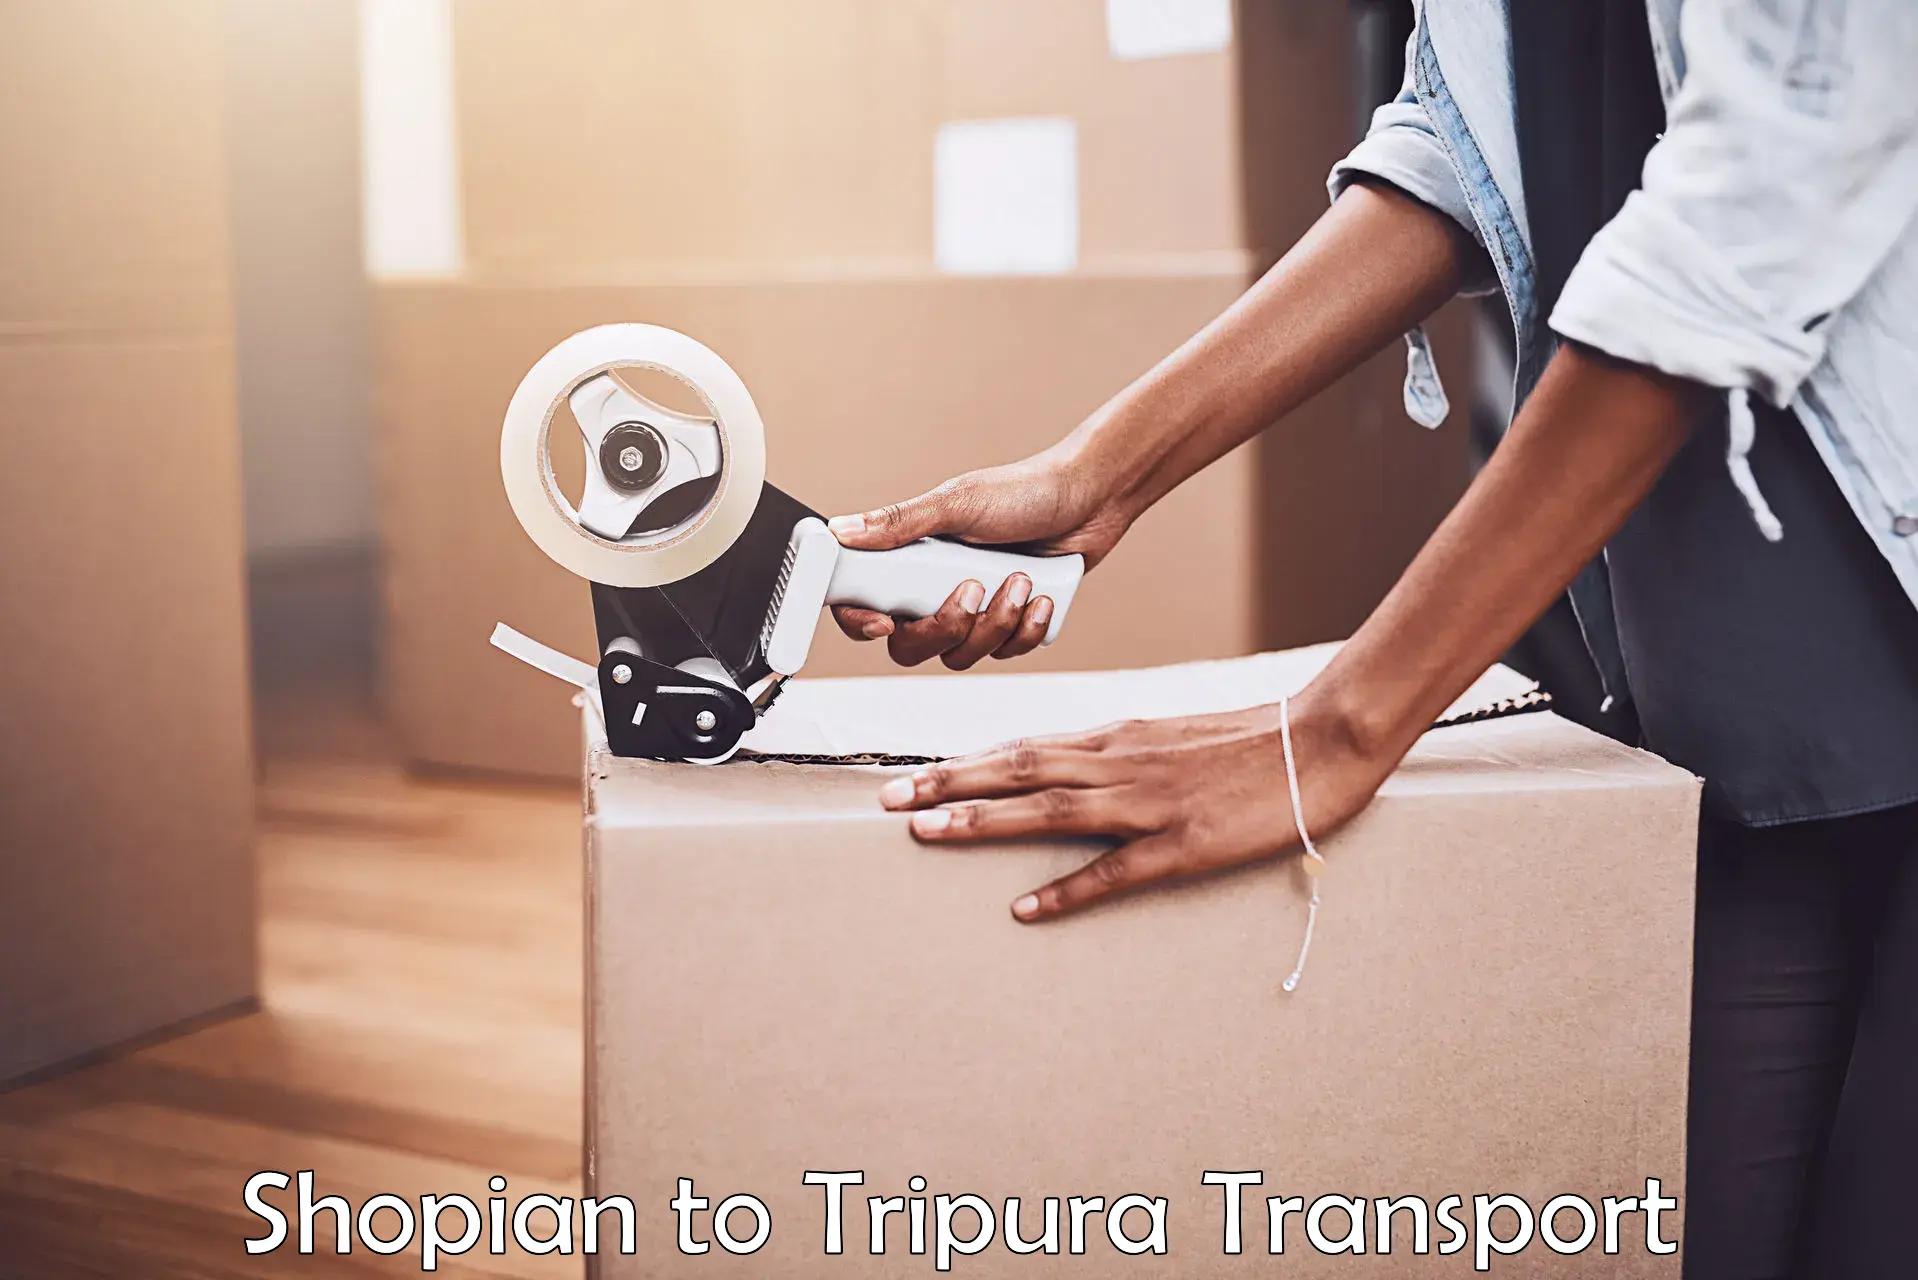 Road transport online services Shopian to Tripura